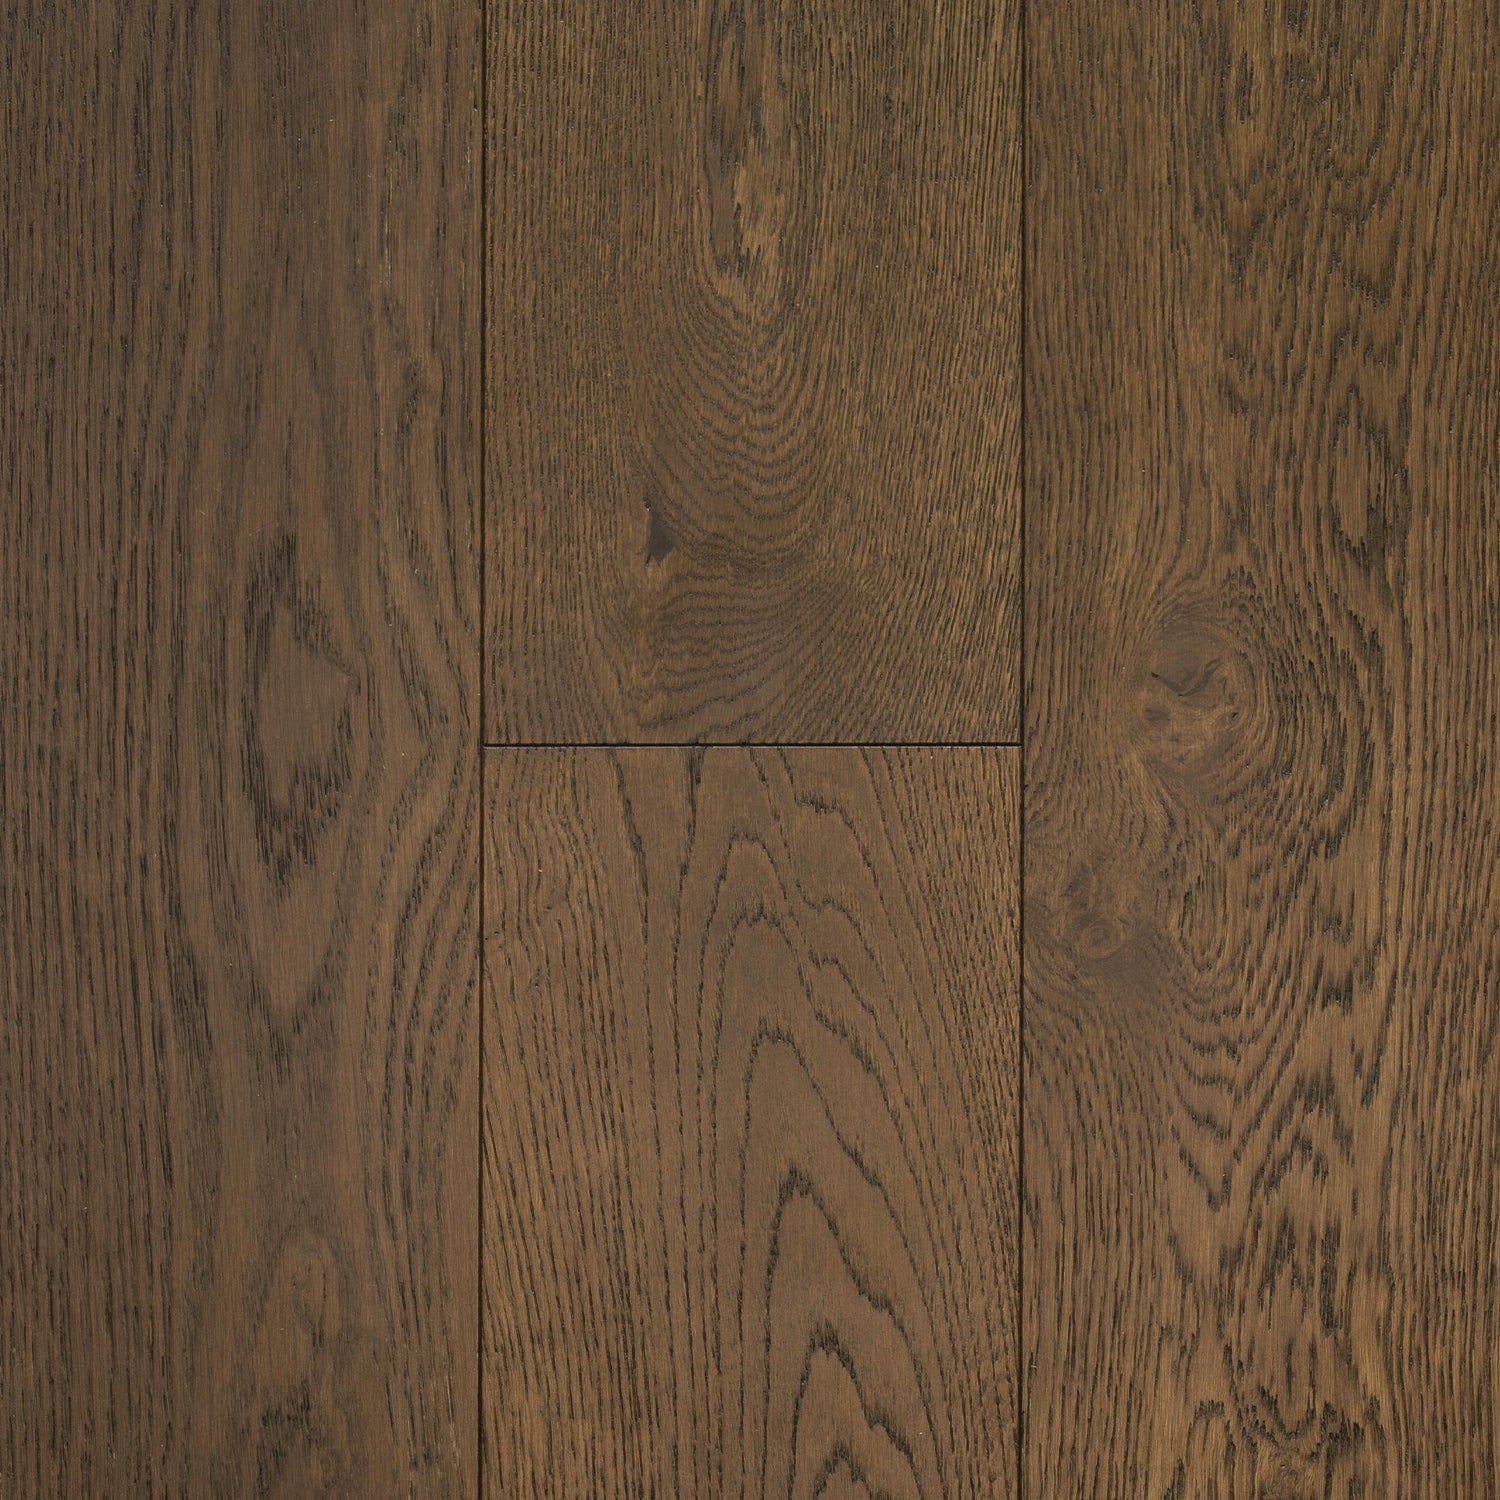 Homestead Timber Flooring T&G